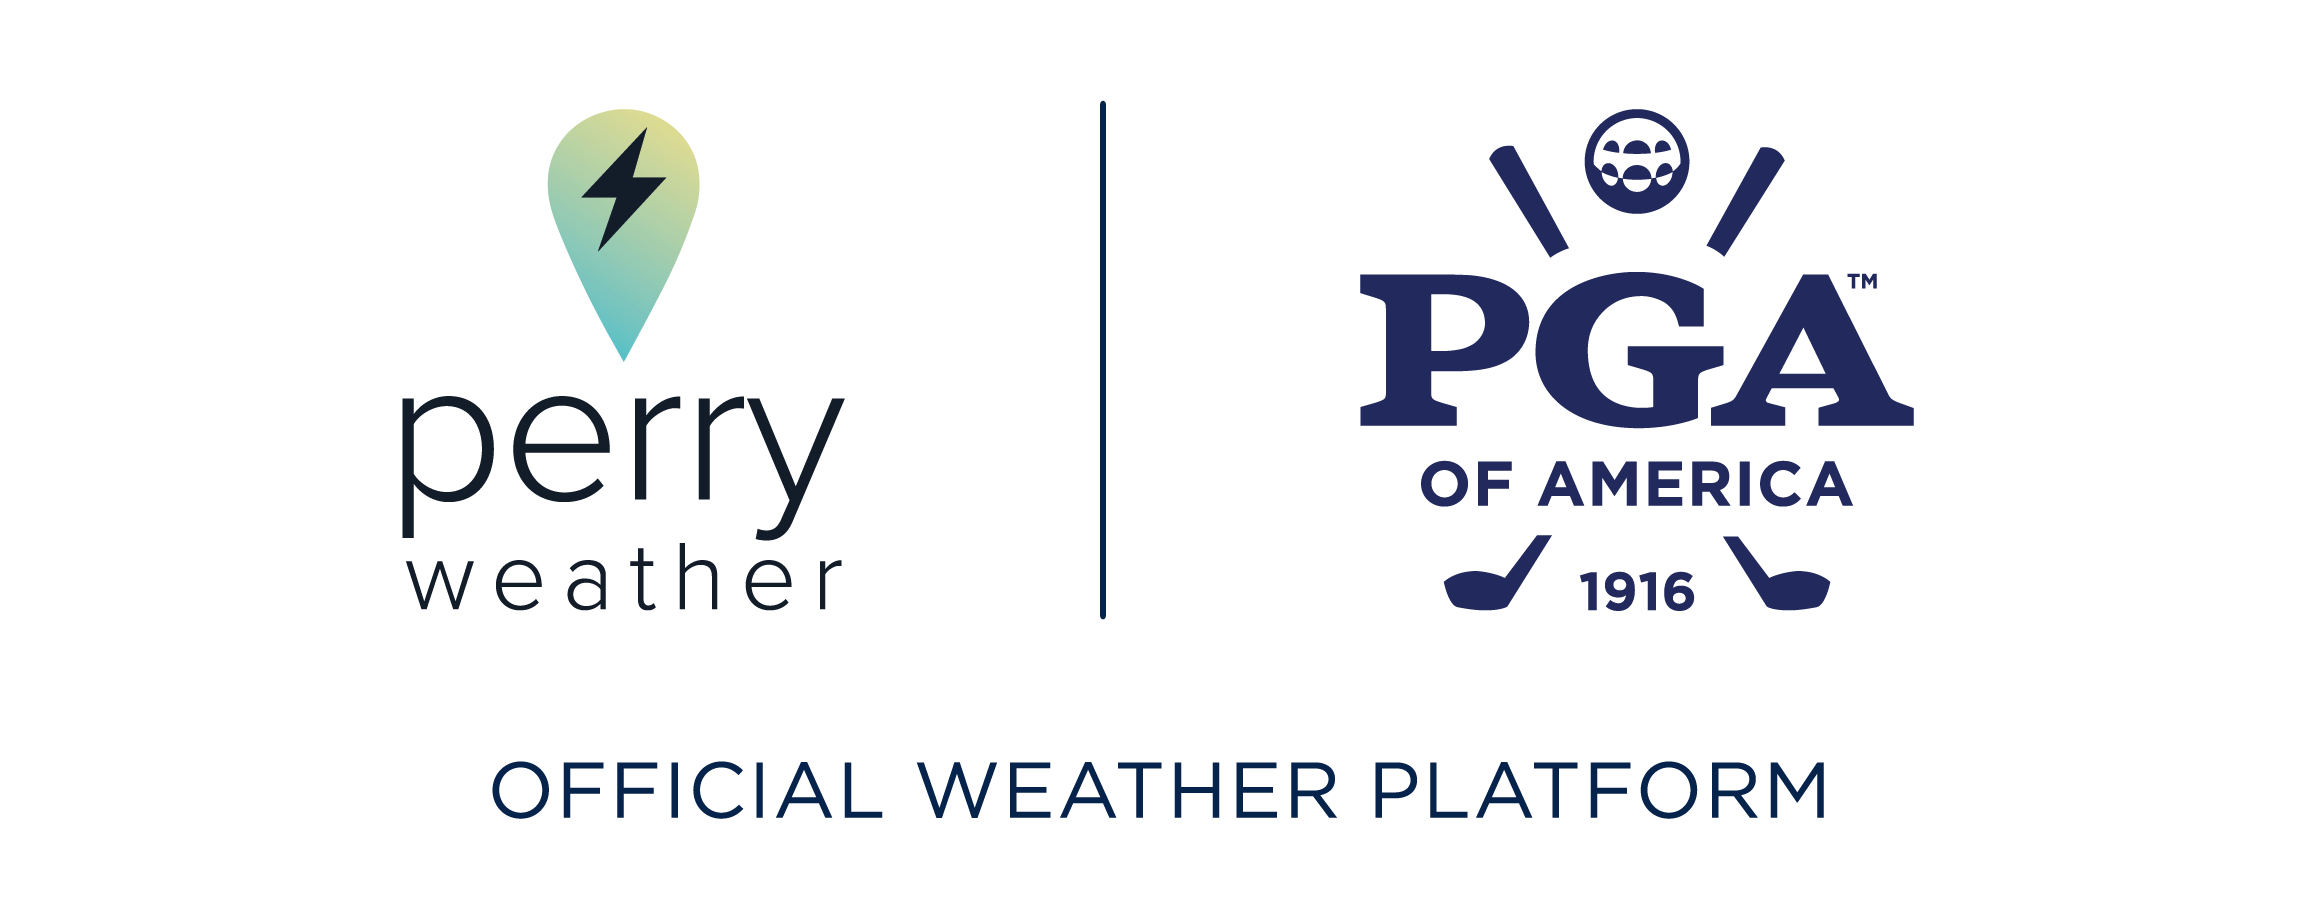 Perry Weather PGA Official Weather Platform Partner